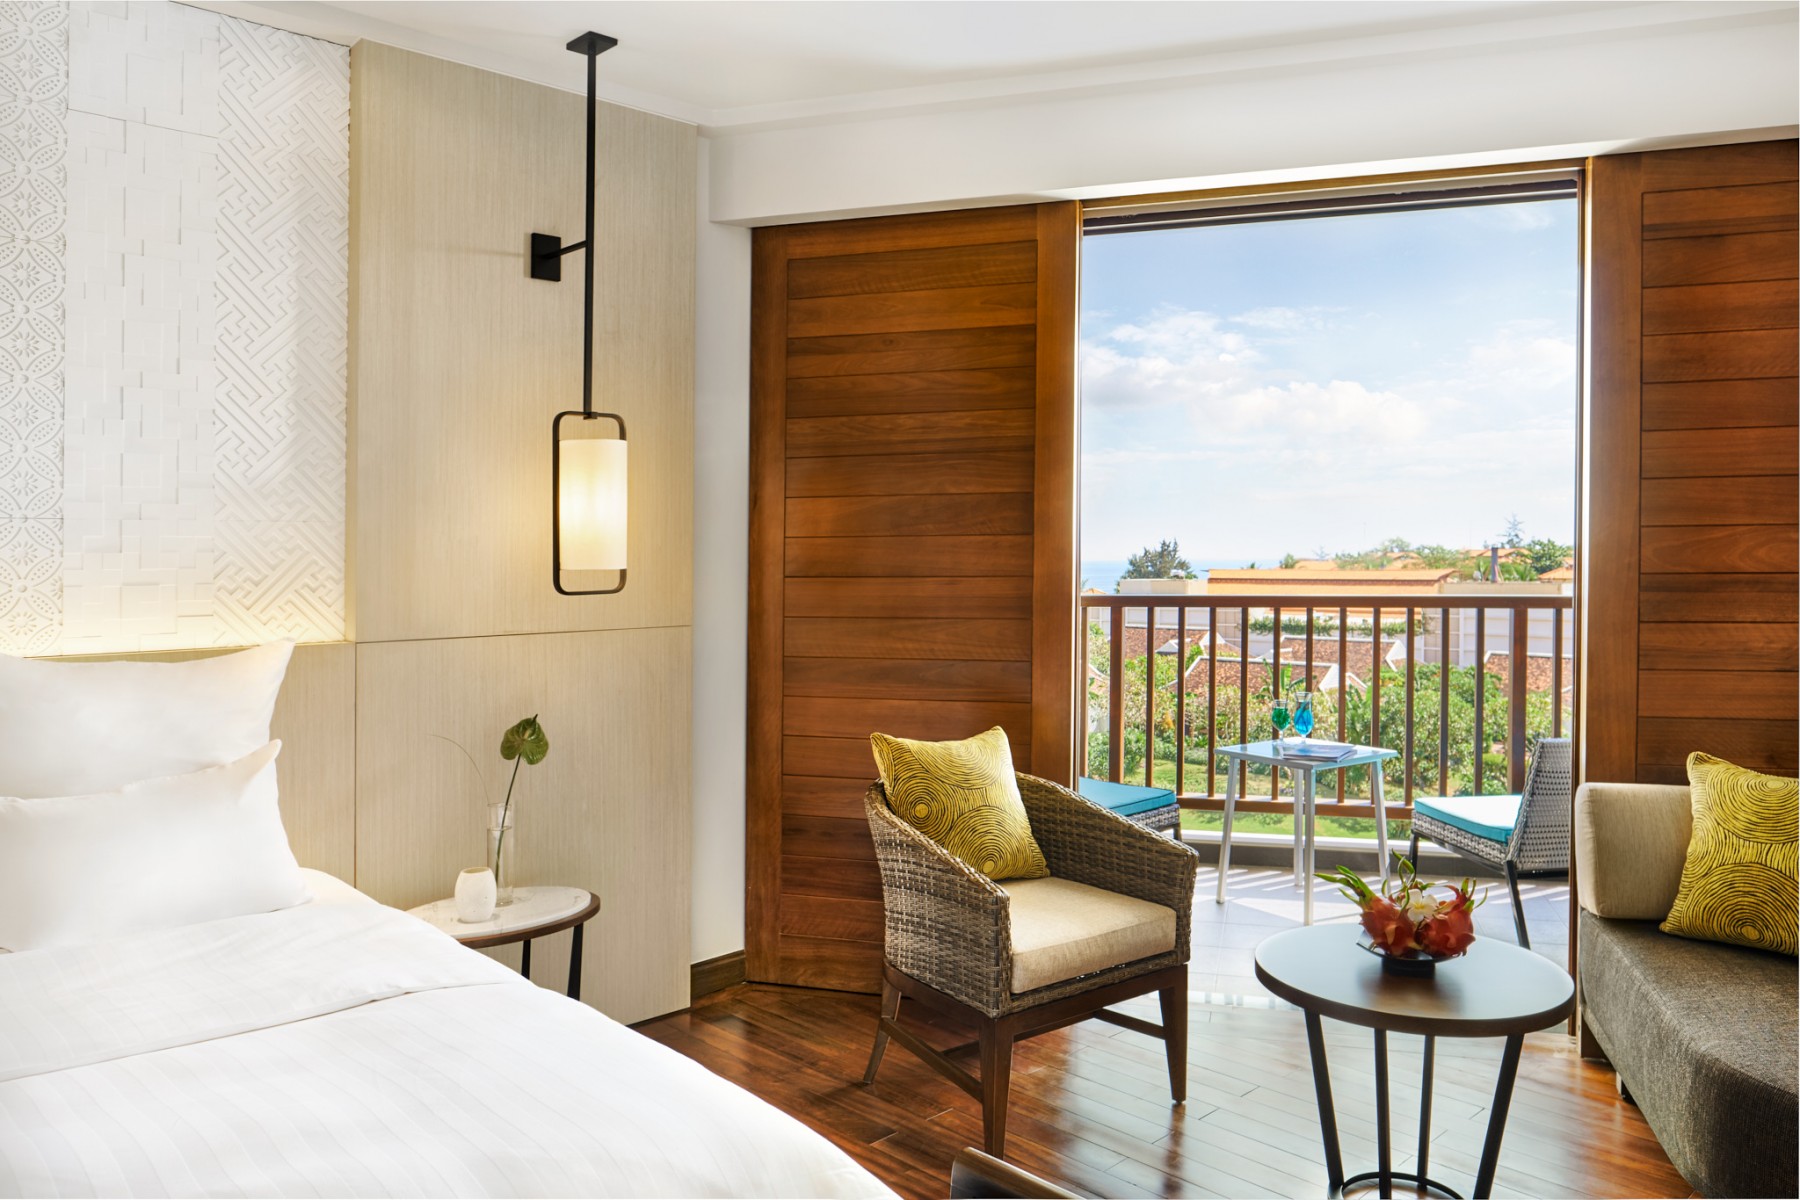 deluxe-king-bed-room-cottage-at-pullman-danang-beach-resort-vietnam-5-star-hotel-room